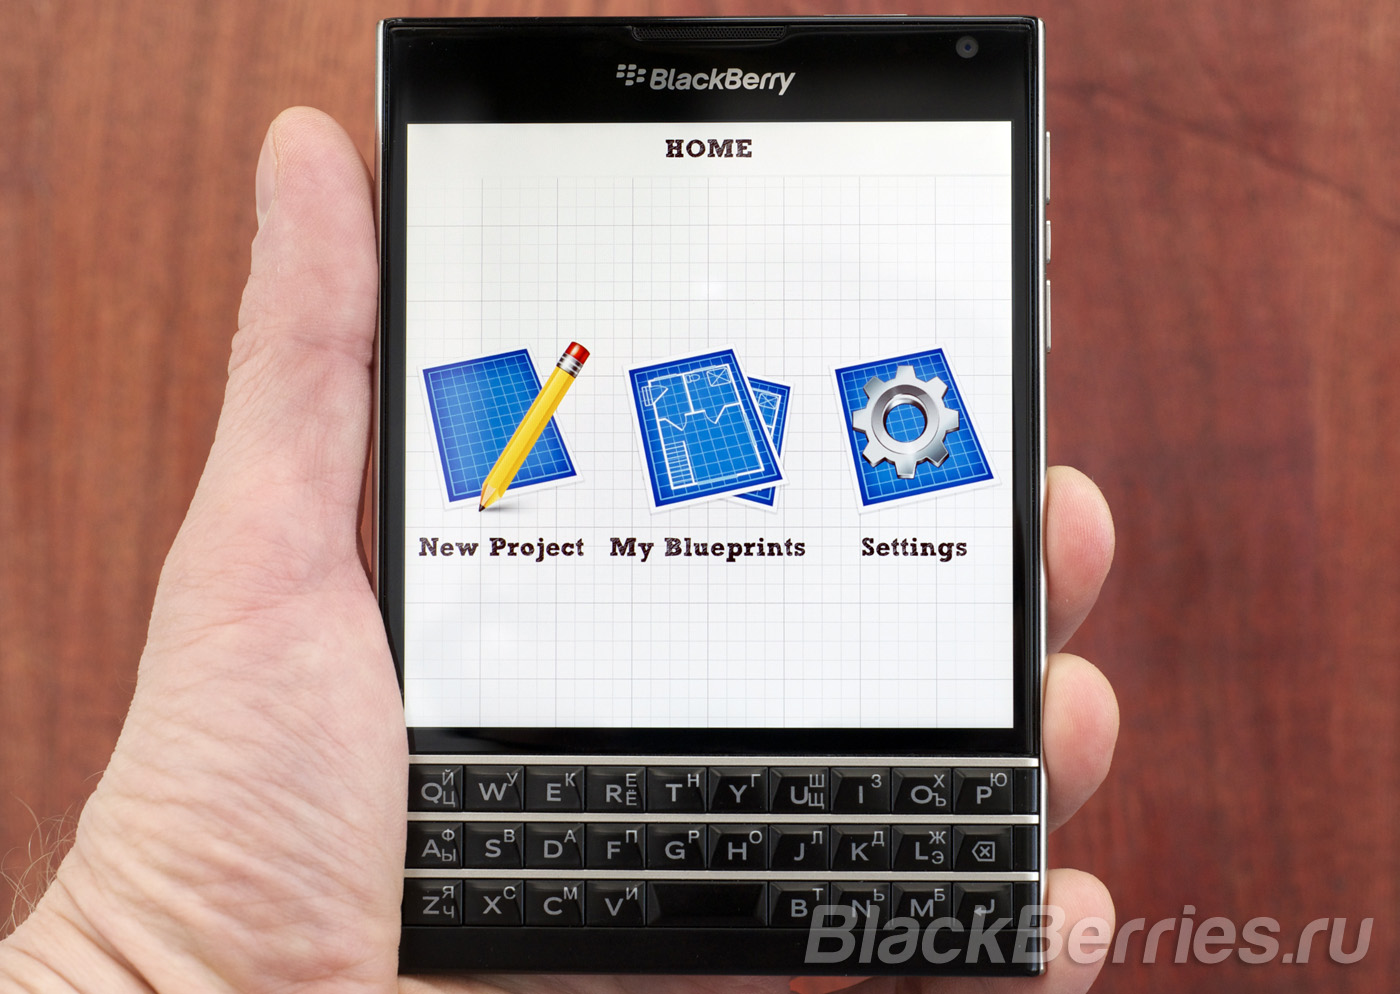 BlackBerry-Passport-Blueprints-1